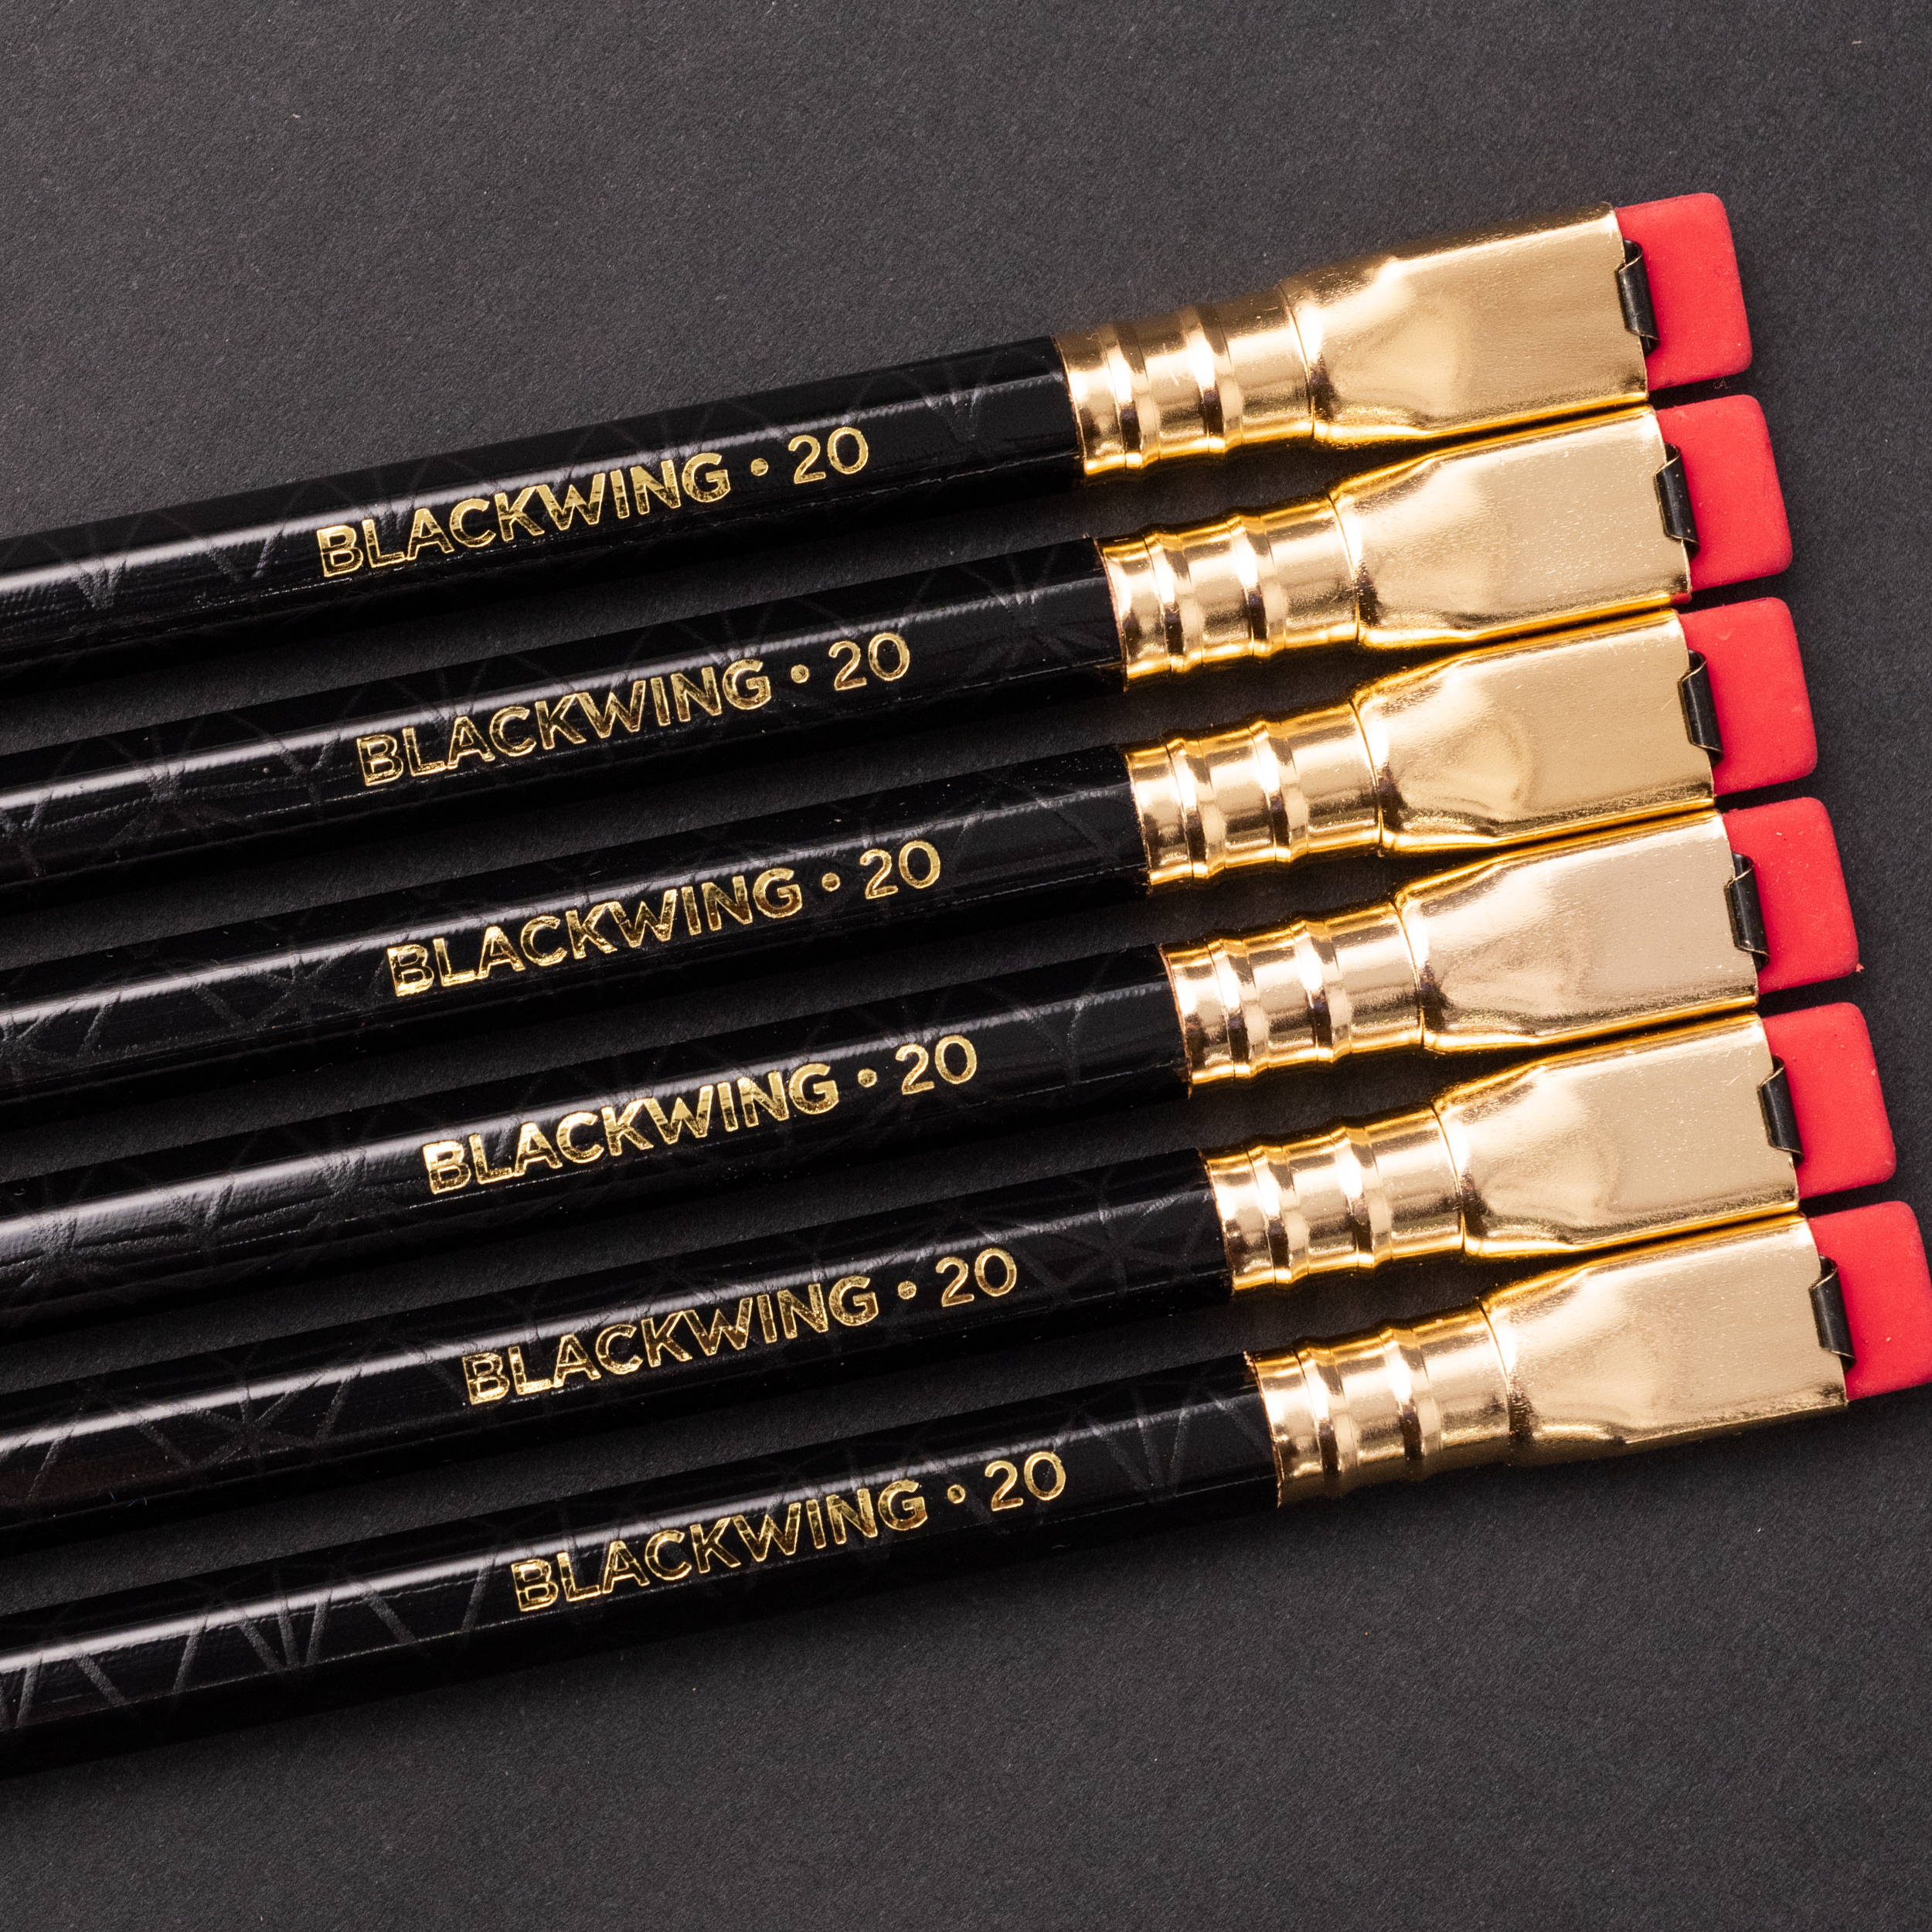 Blackwing 20 pencils